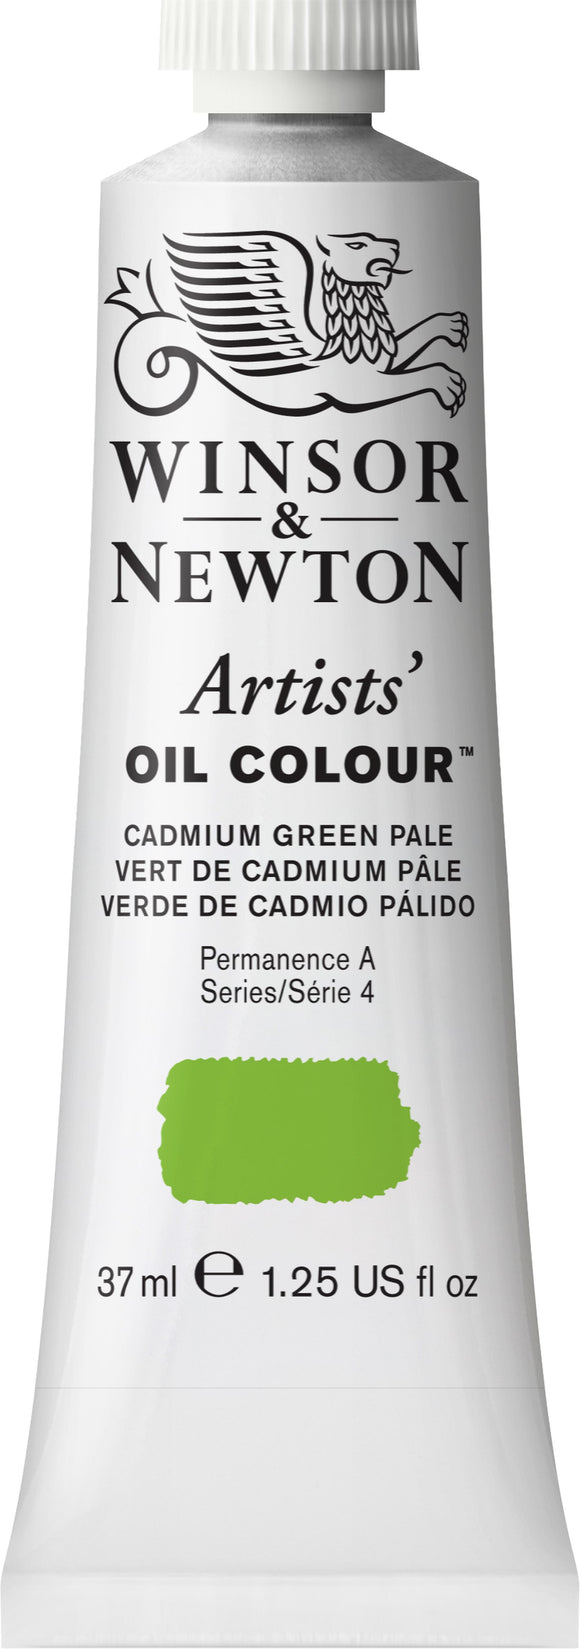 Winsor & Newton Artist Oil Colour Cadmium Green Pale 37Ml